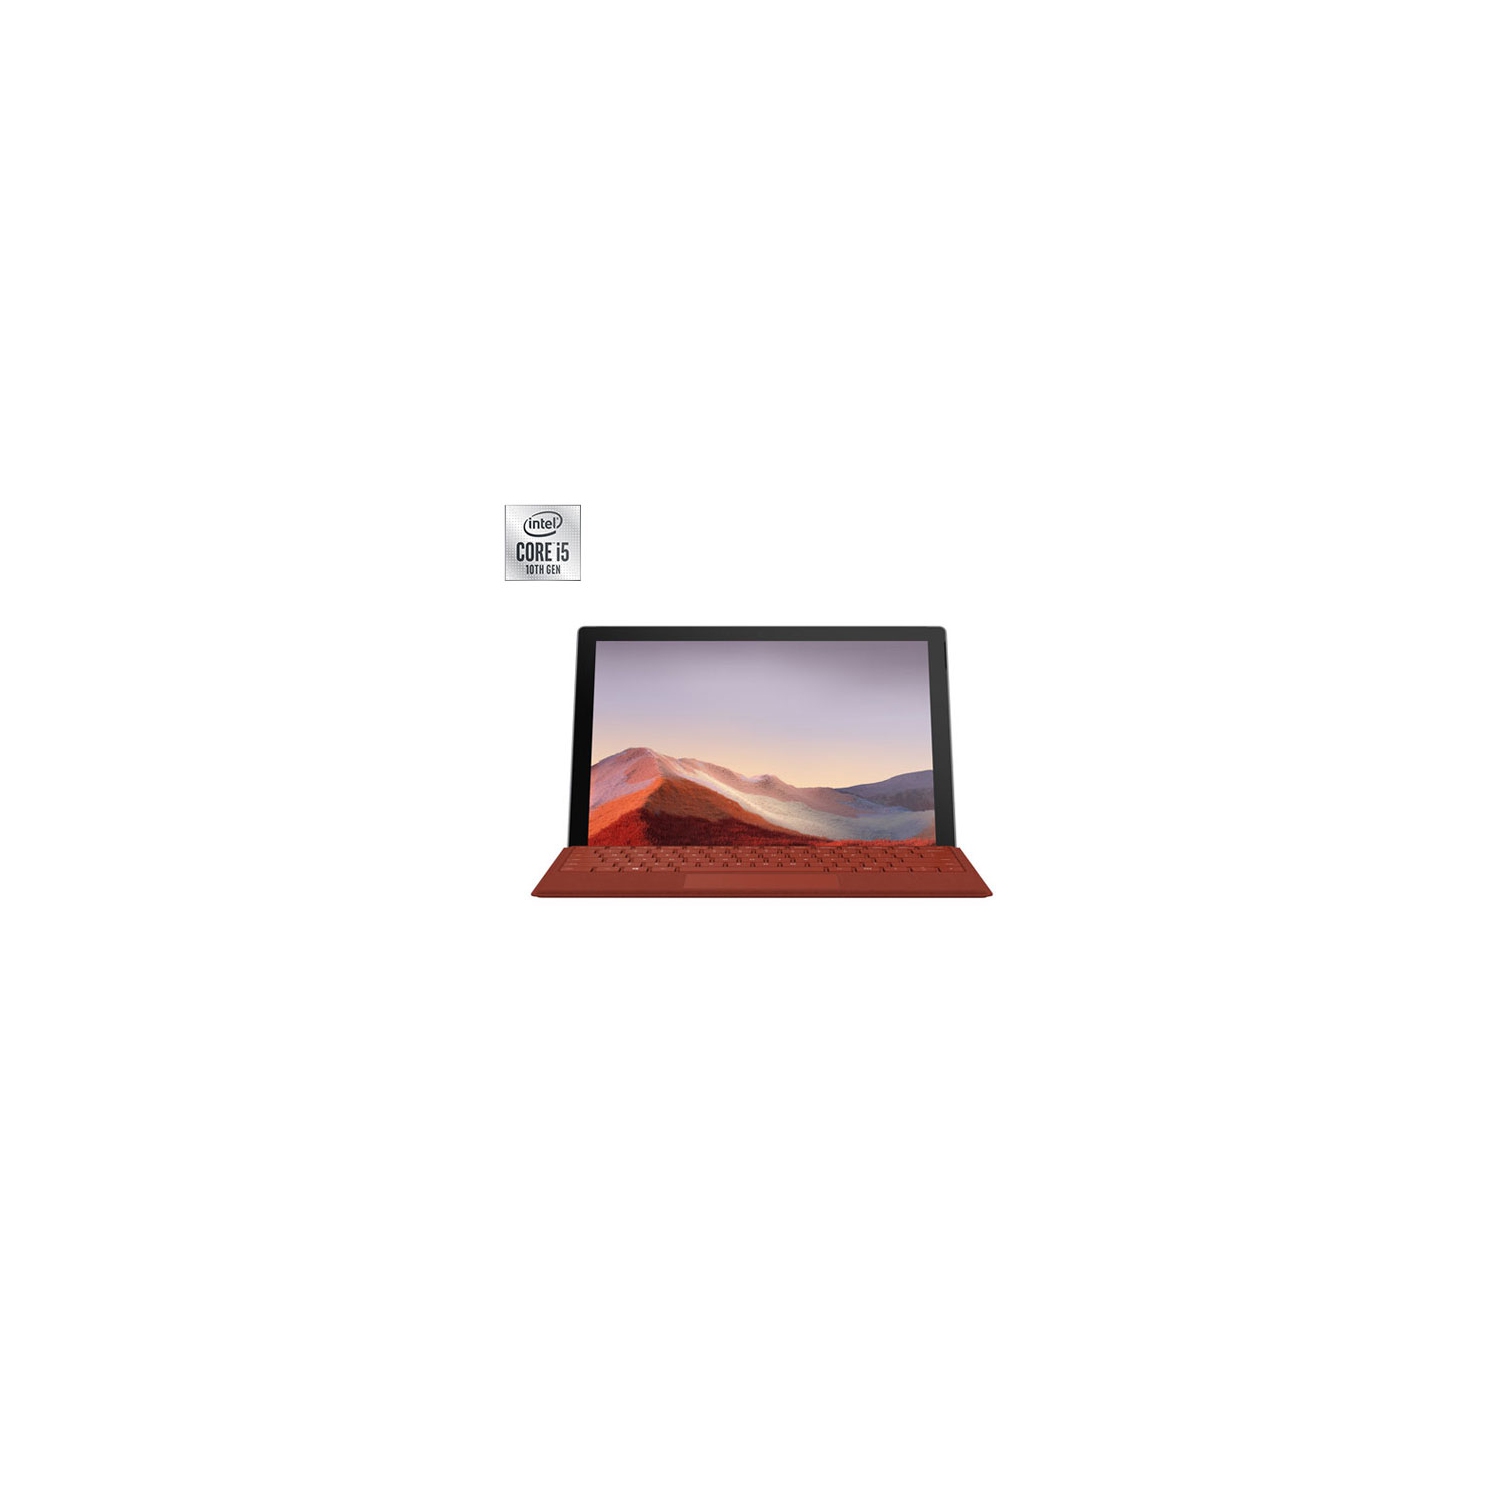 Refurbished (Excellent) -Microsoft Surface Pro 7 12.3" 256GB Windows 10 Tablet w/ 10th Gen Intel Ci5/8GB RAM -Platinum